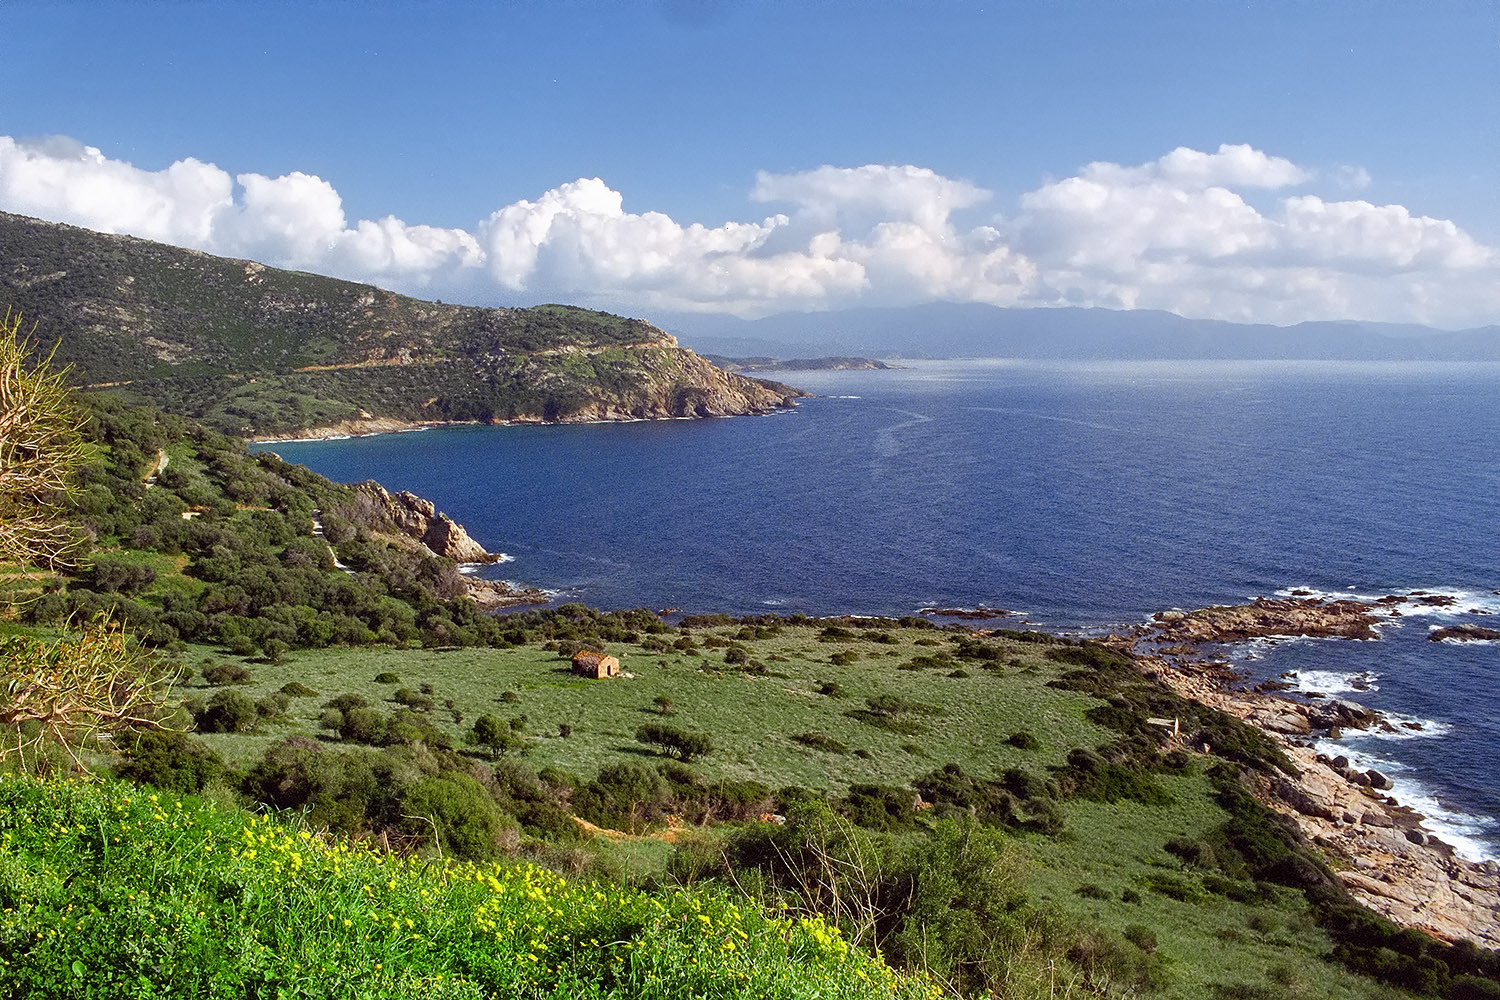 Along Corsica's west coast